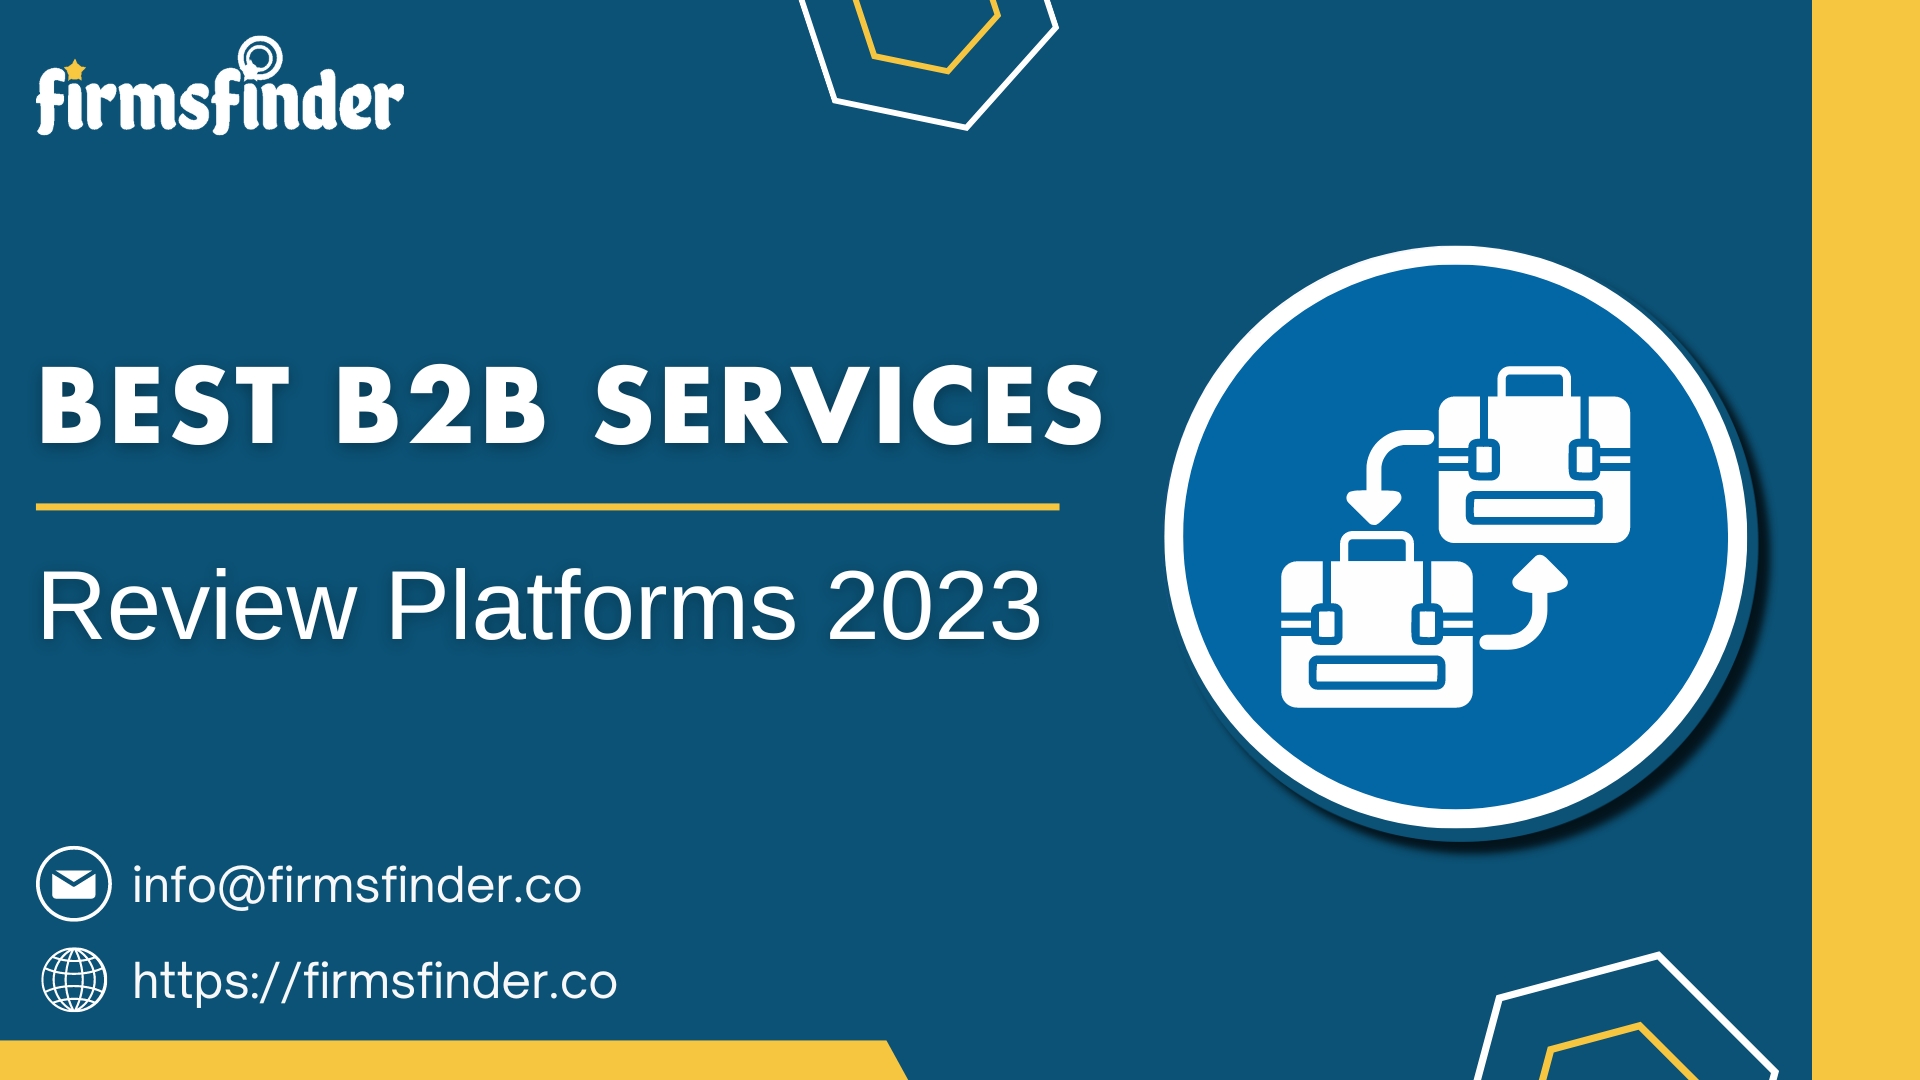 Best B2B Services Review Platforms 2023